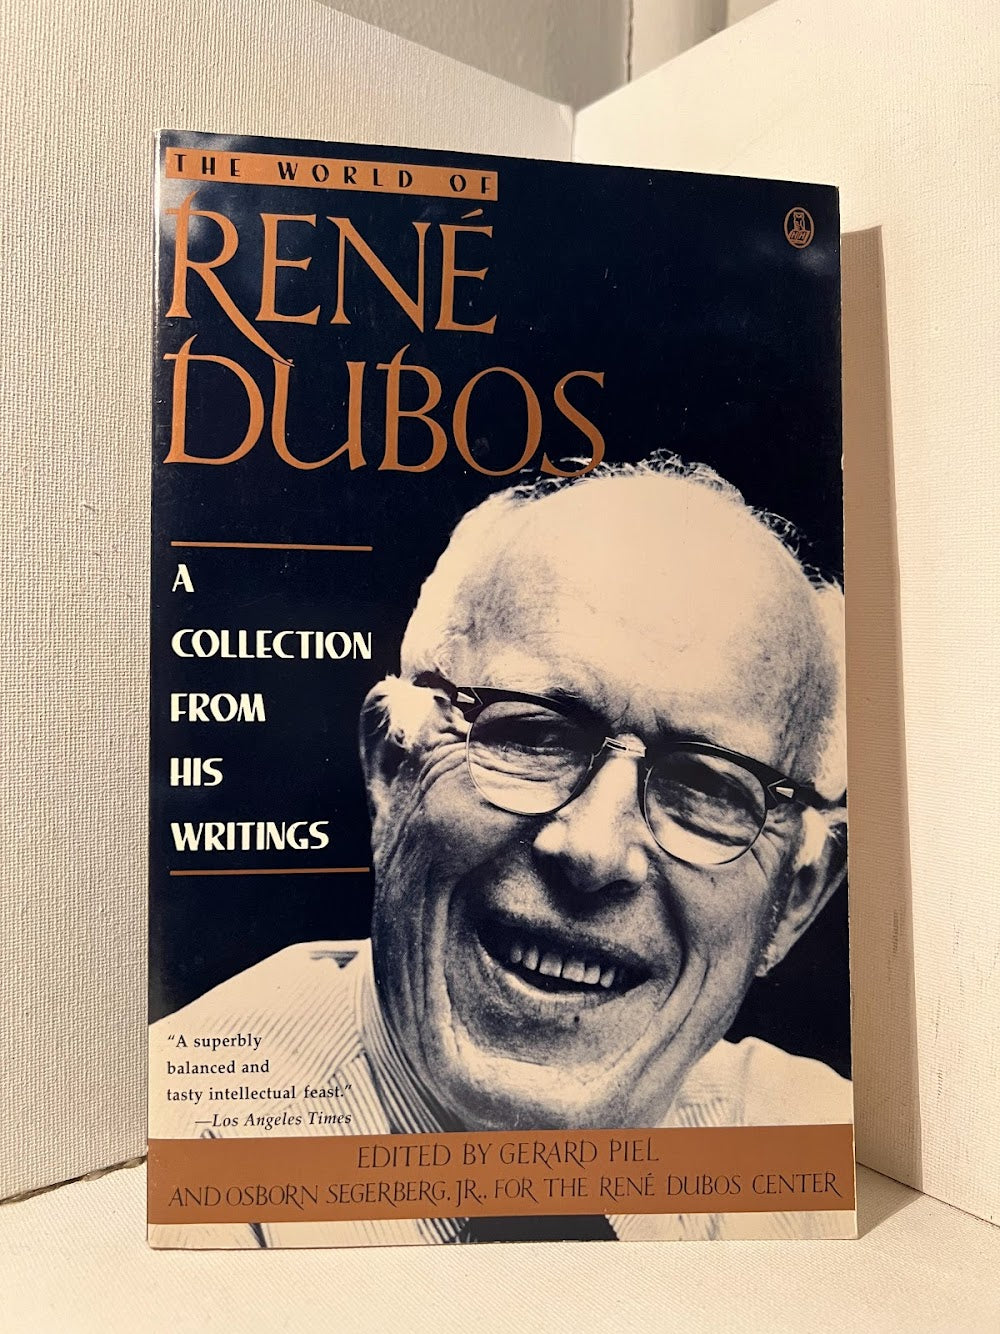 The World of Rene Dubos